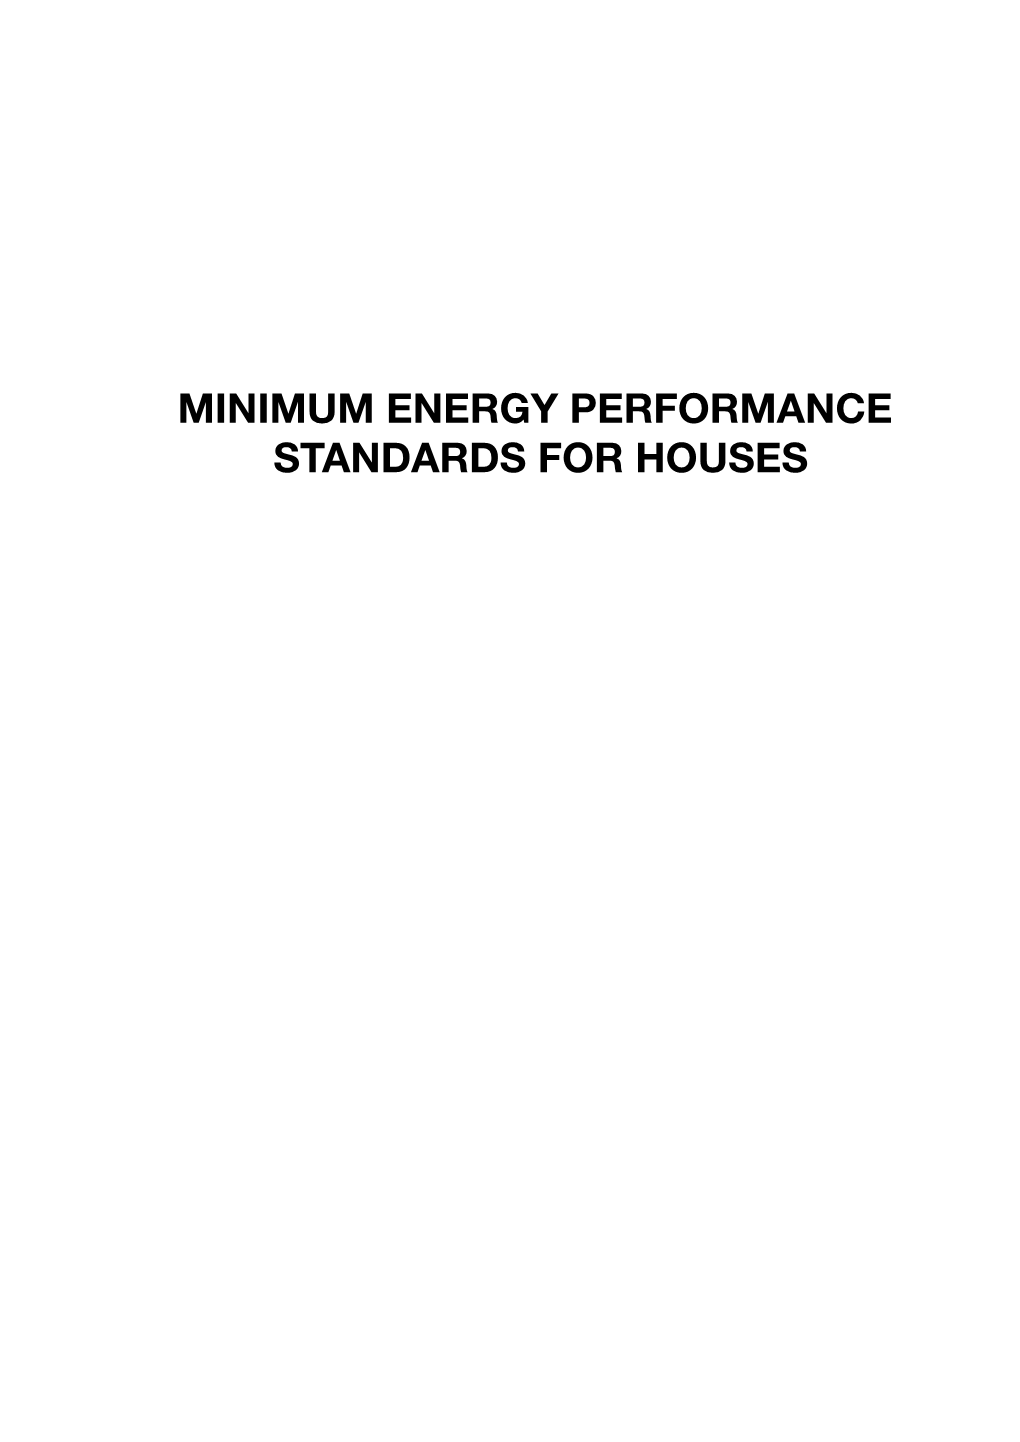 Minimum Energy Performance Standards for Houses